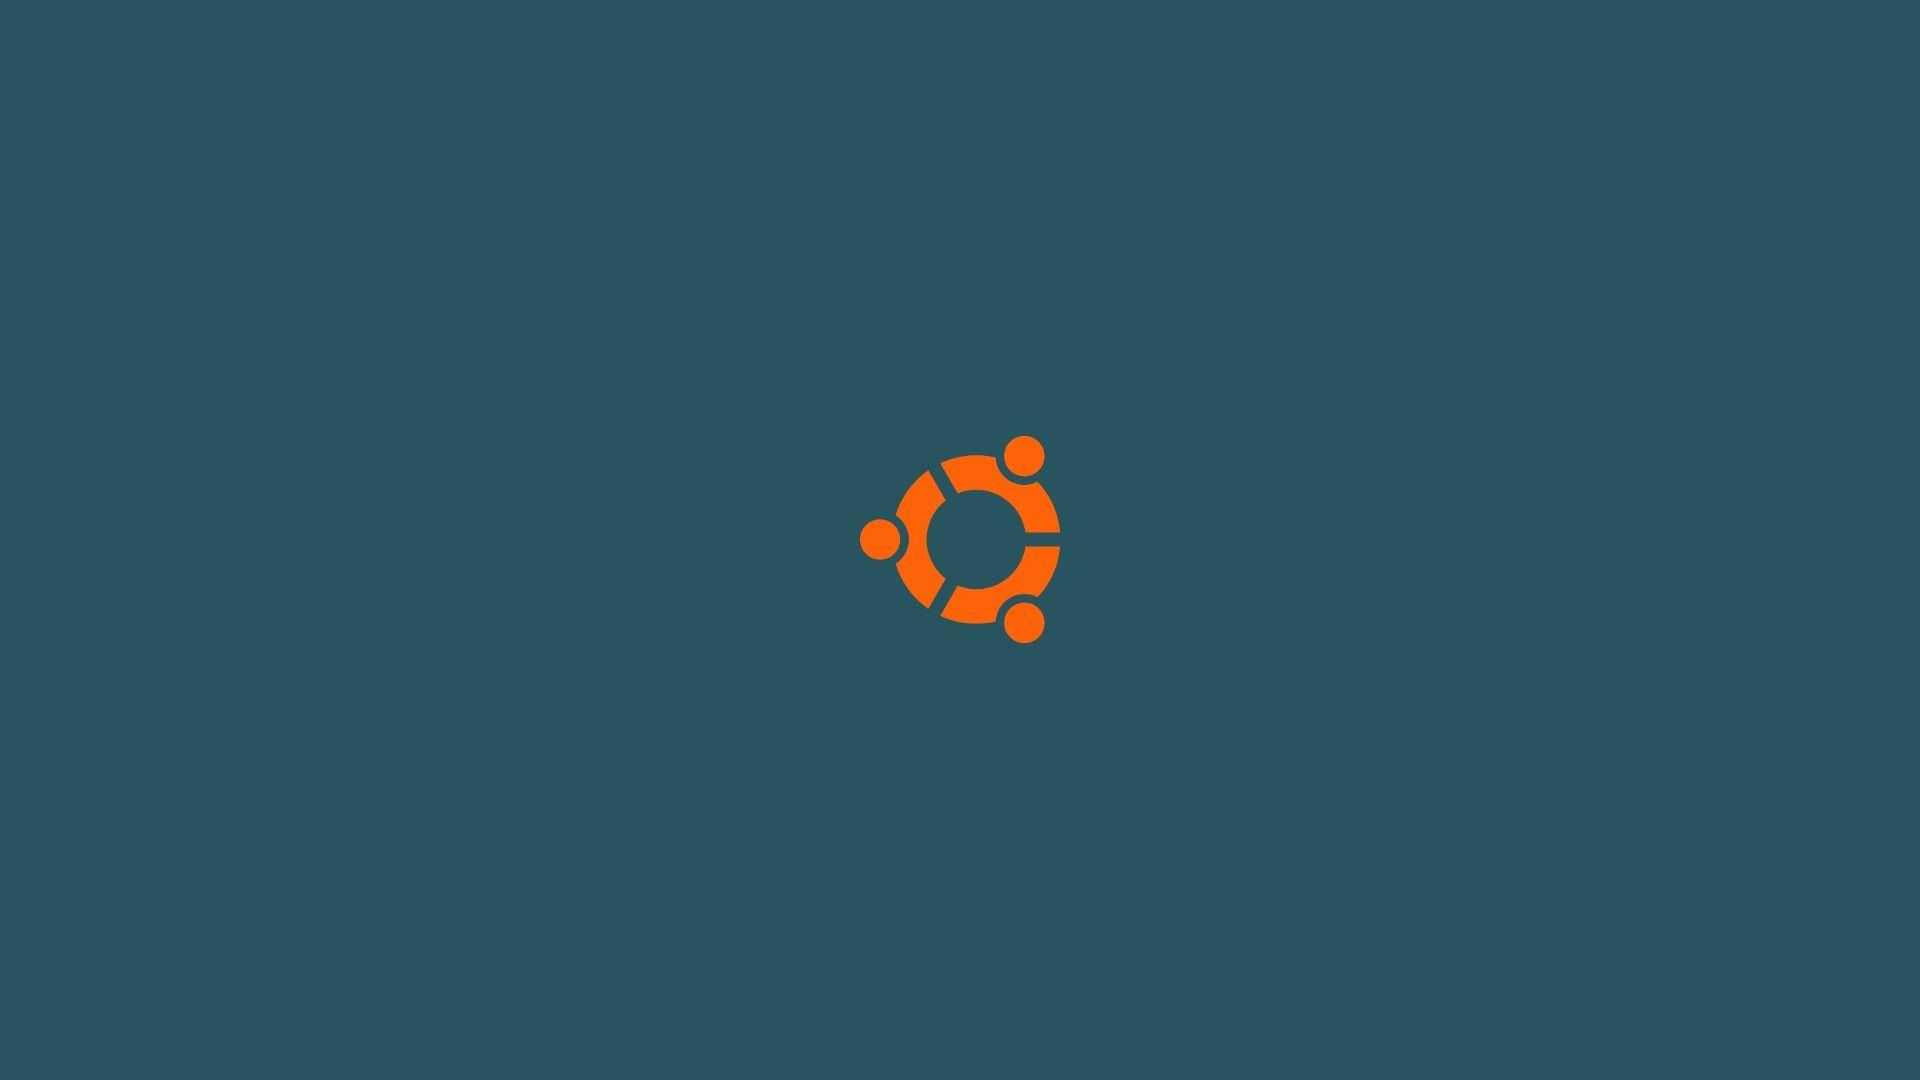 Linux Ubuntu Logo - Linux ubuntu logos simple background wallpaper